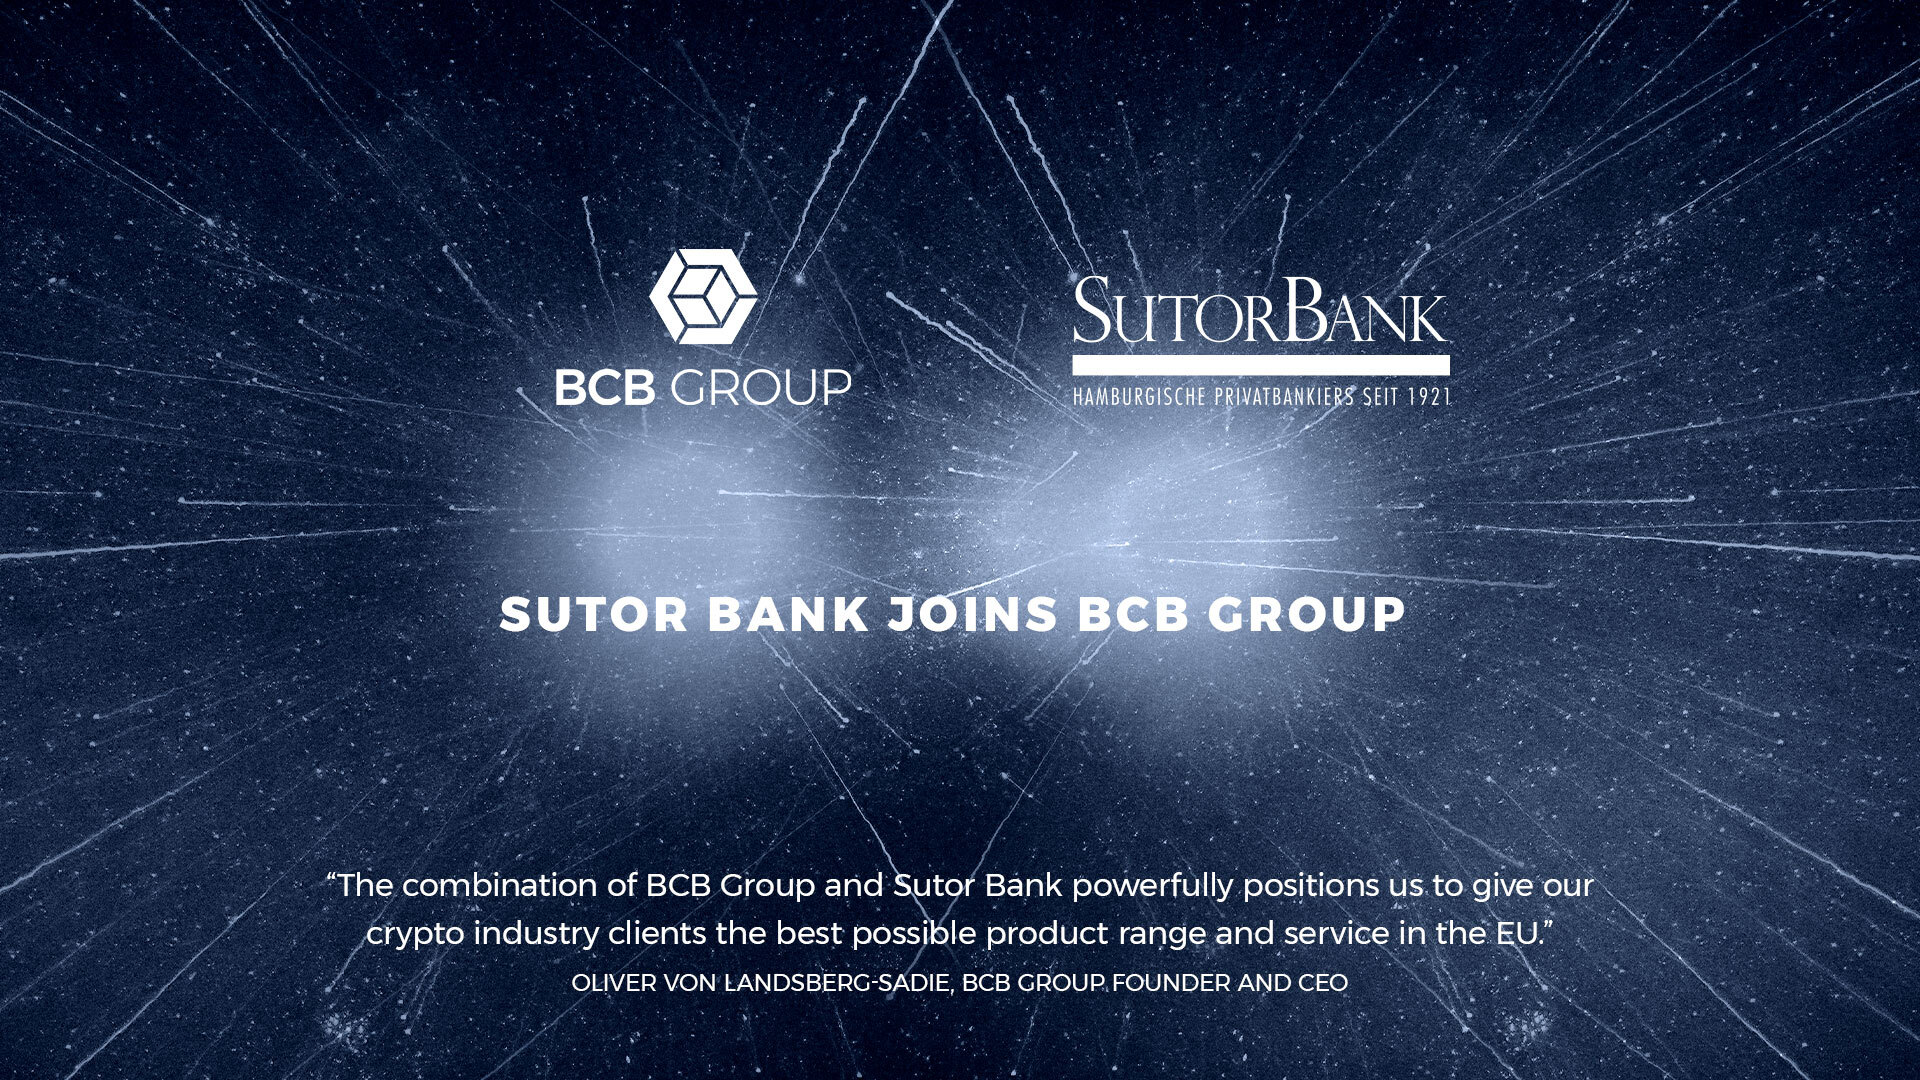 SUTOR BANK JOINS BCB GROUP